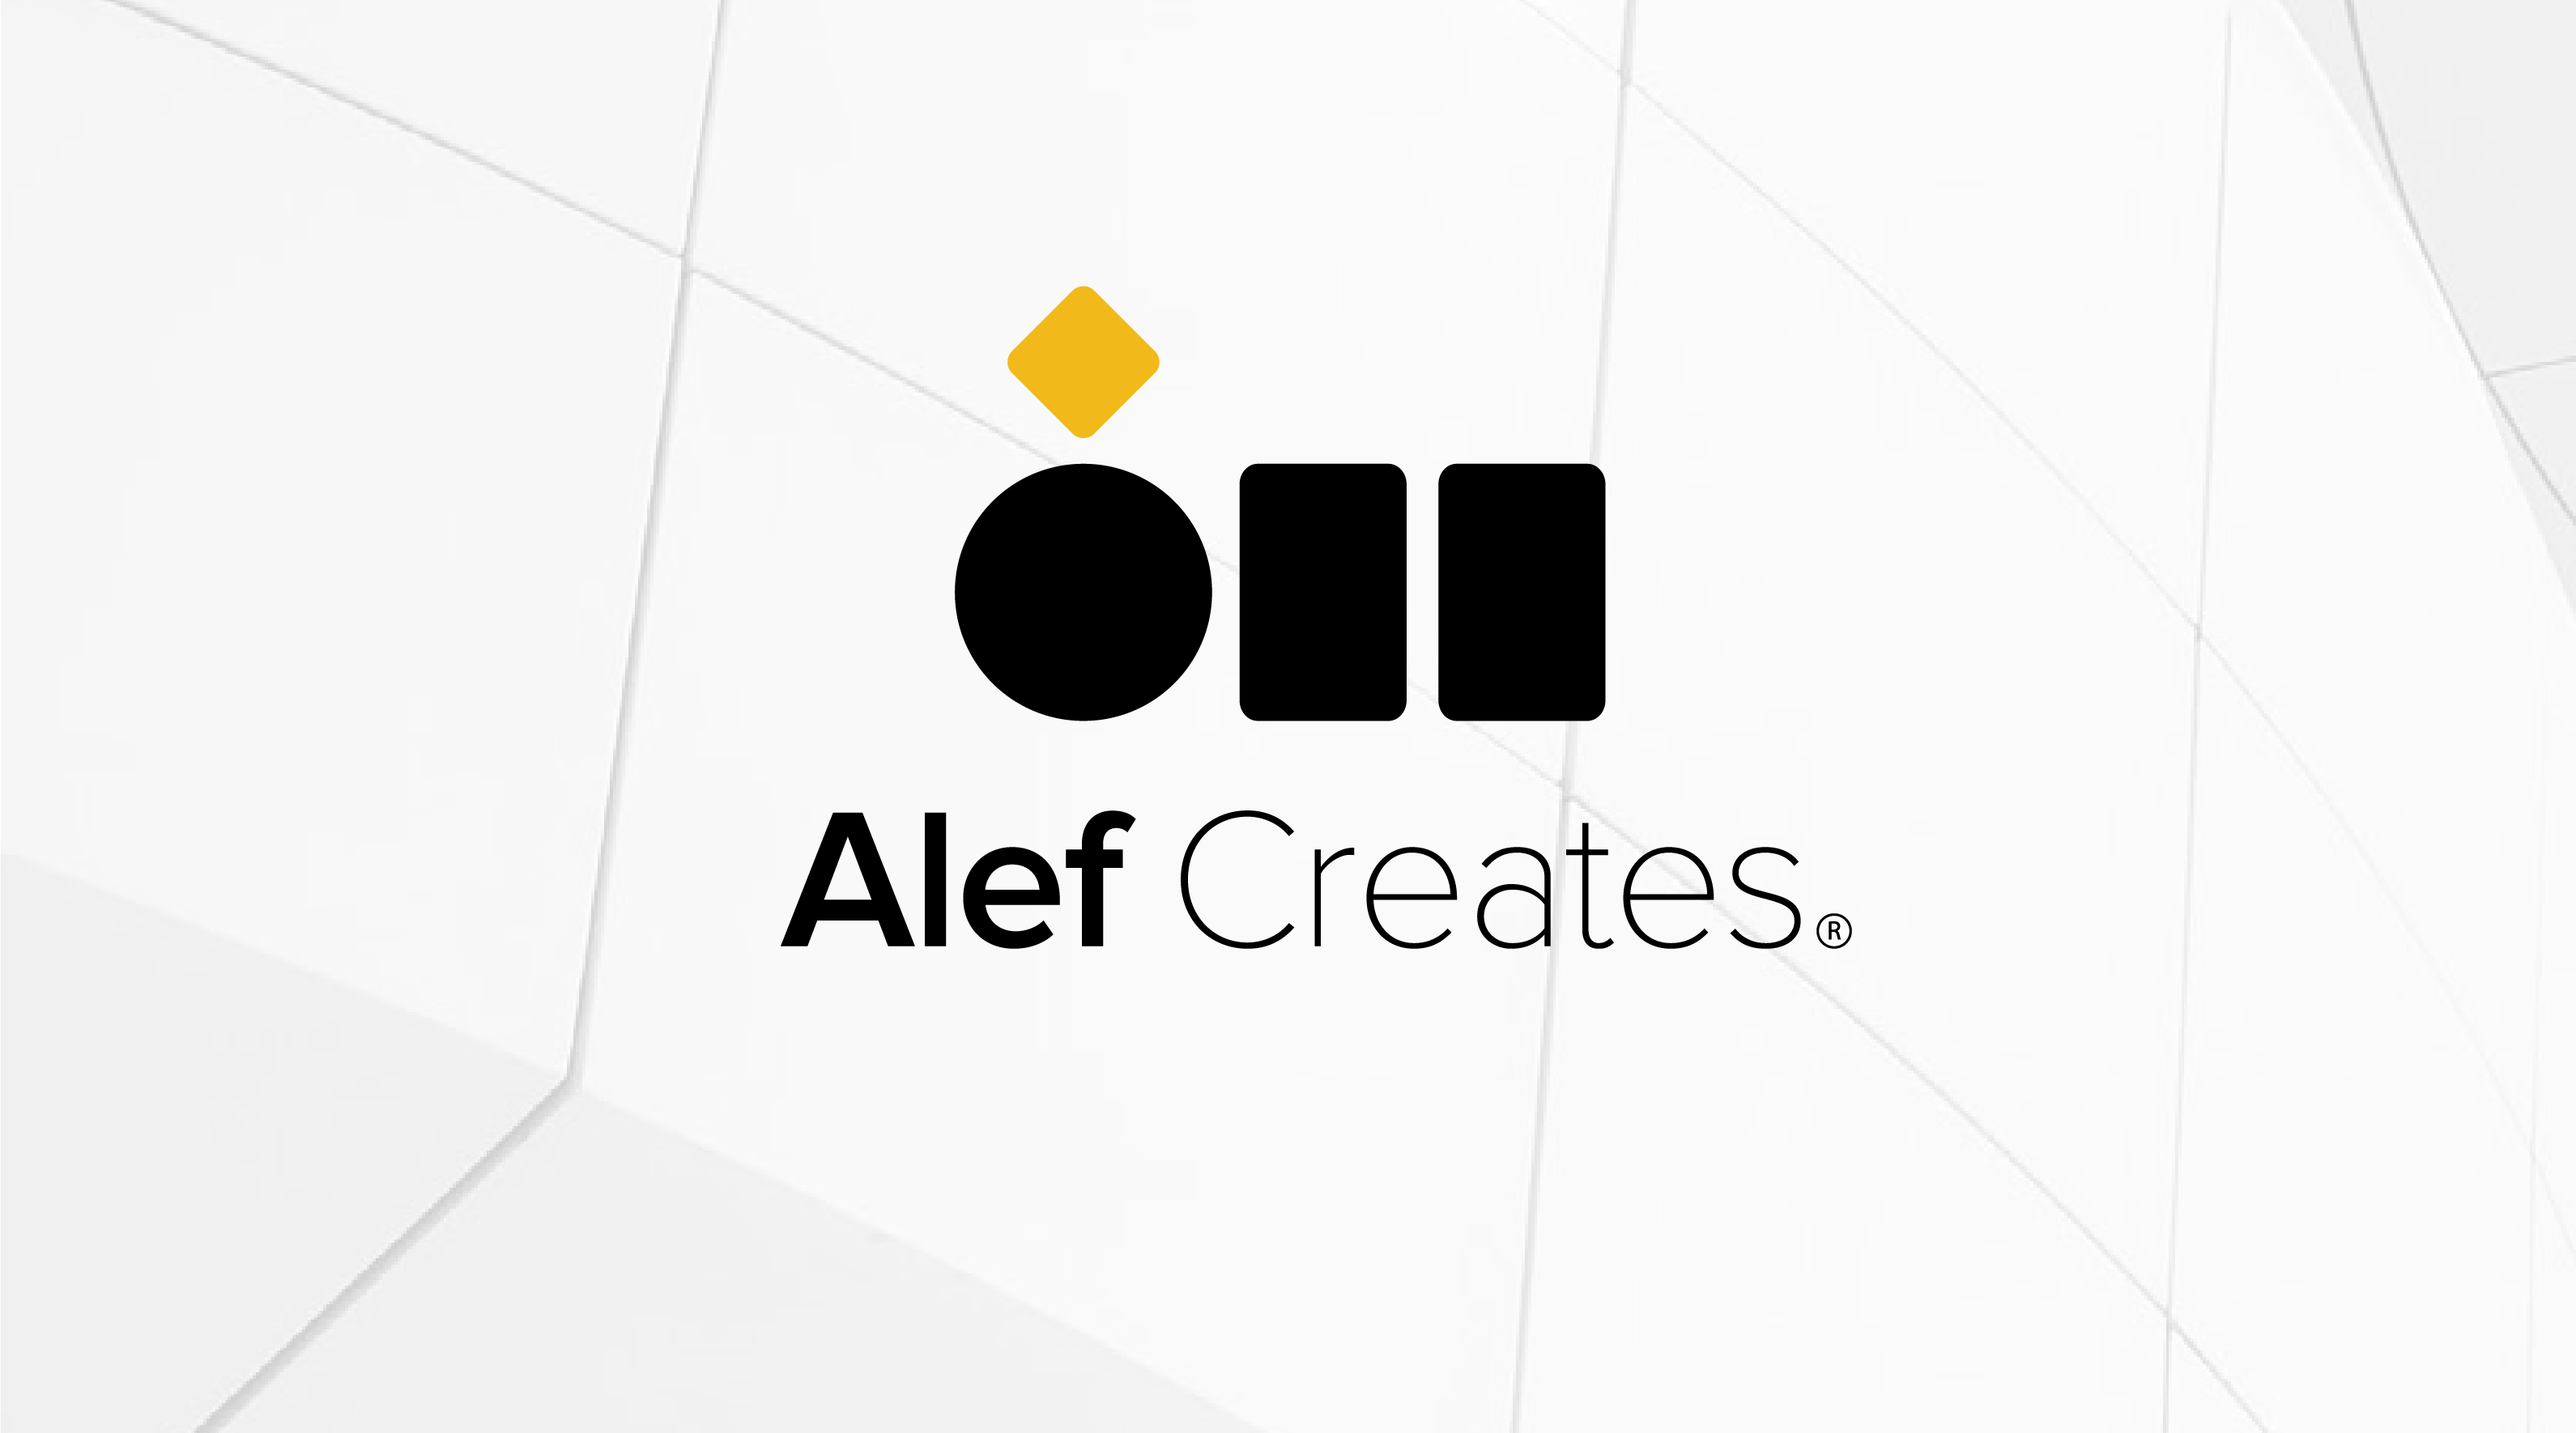 New Collaboration with Alef Creates